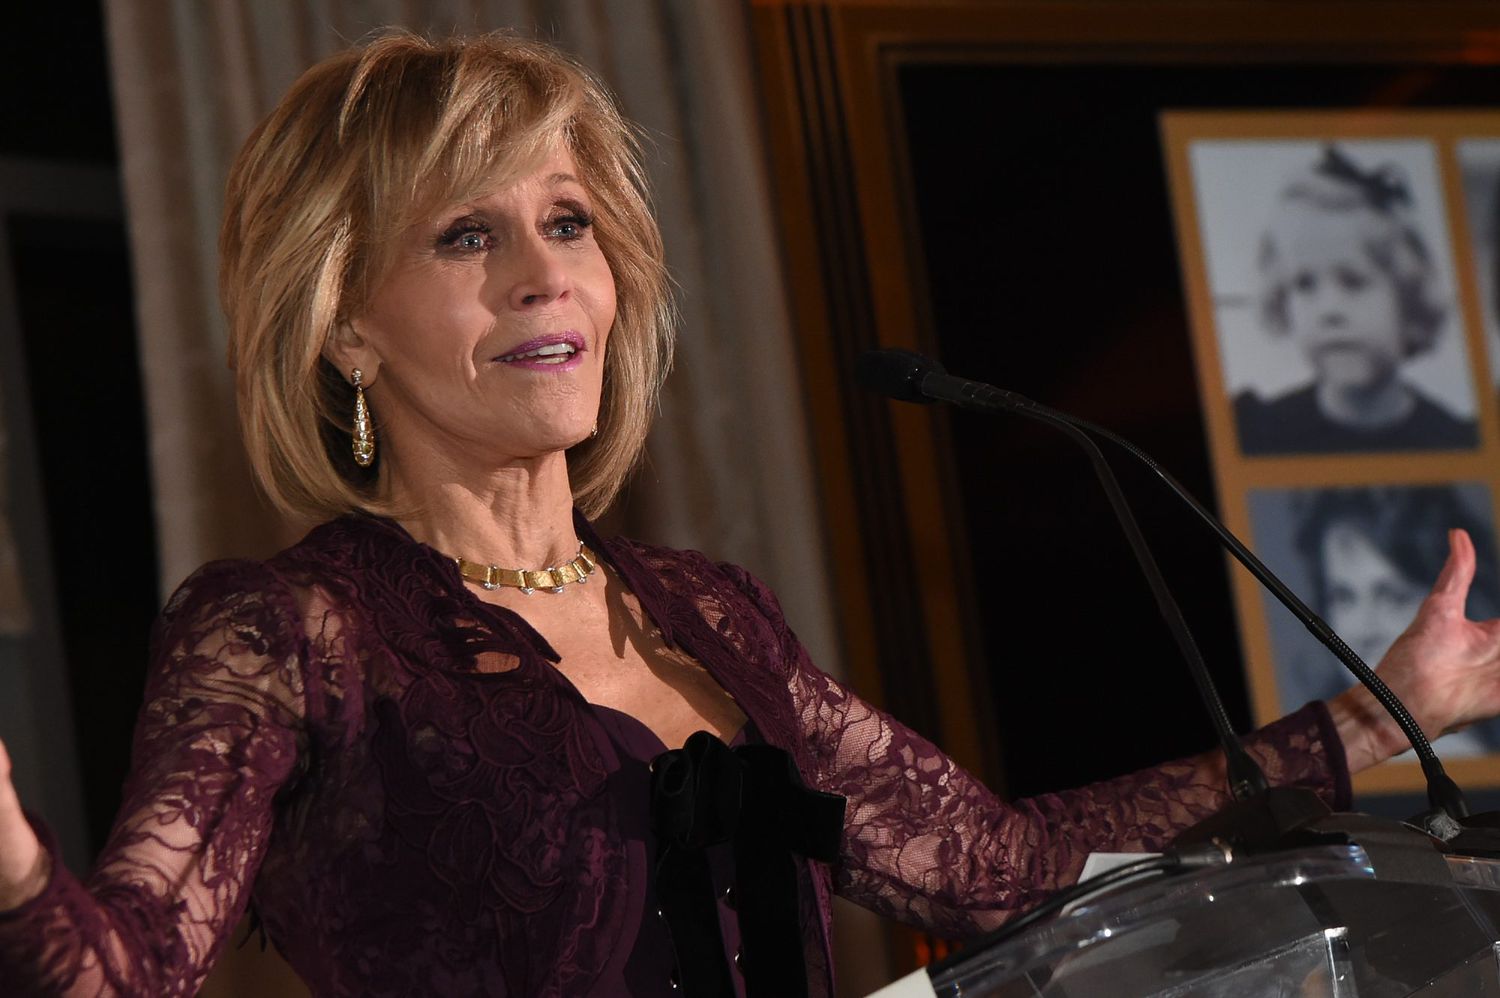 GCAPP Hosts "Eight Decades of Jane" in Celebration of Jane Fonda's 80th Birthday